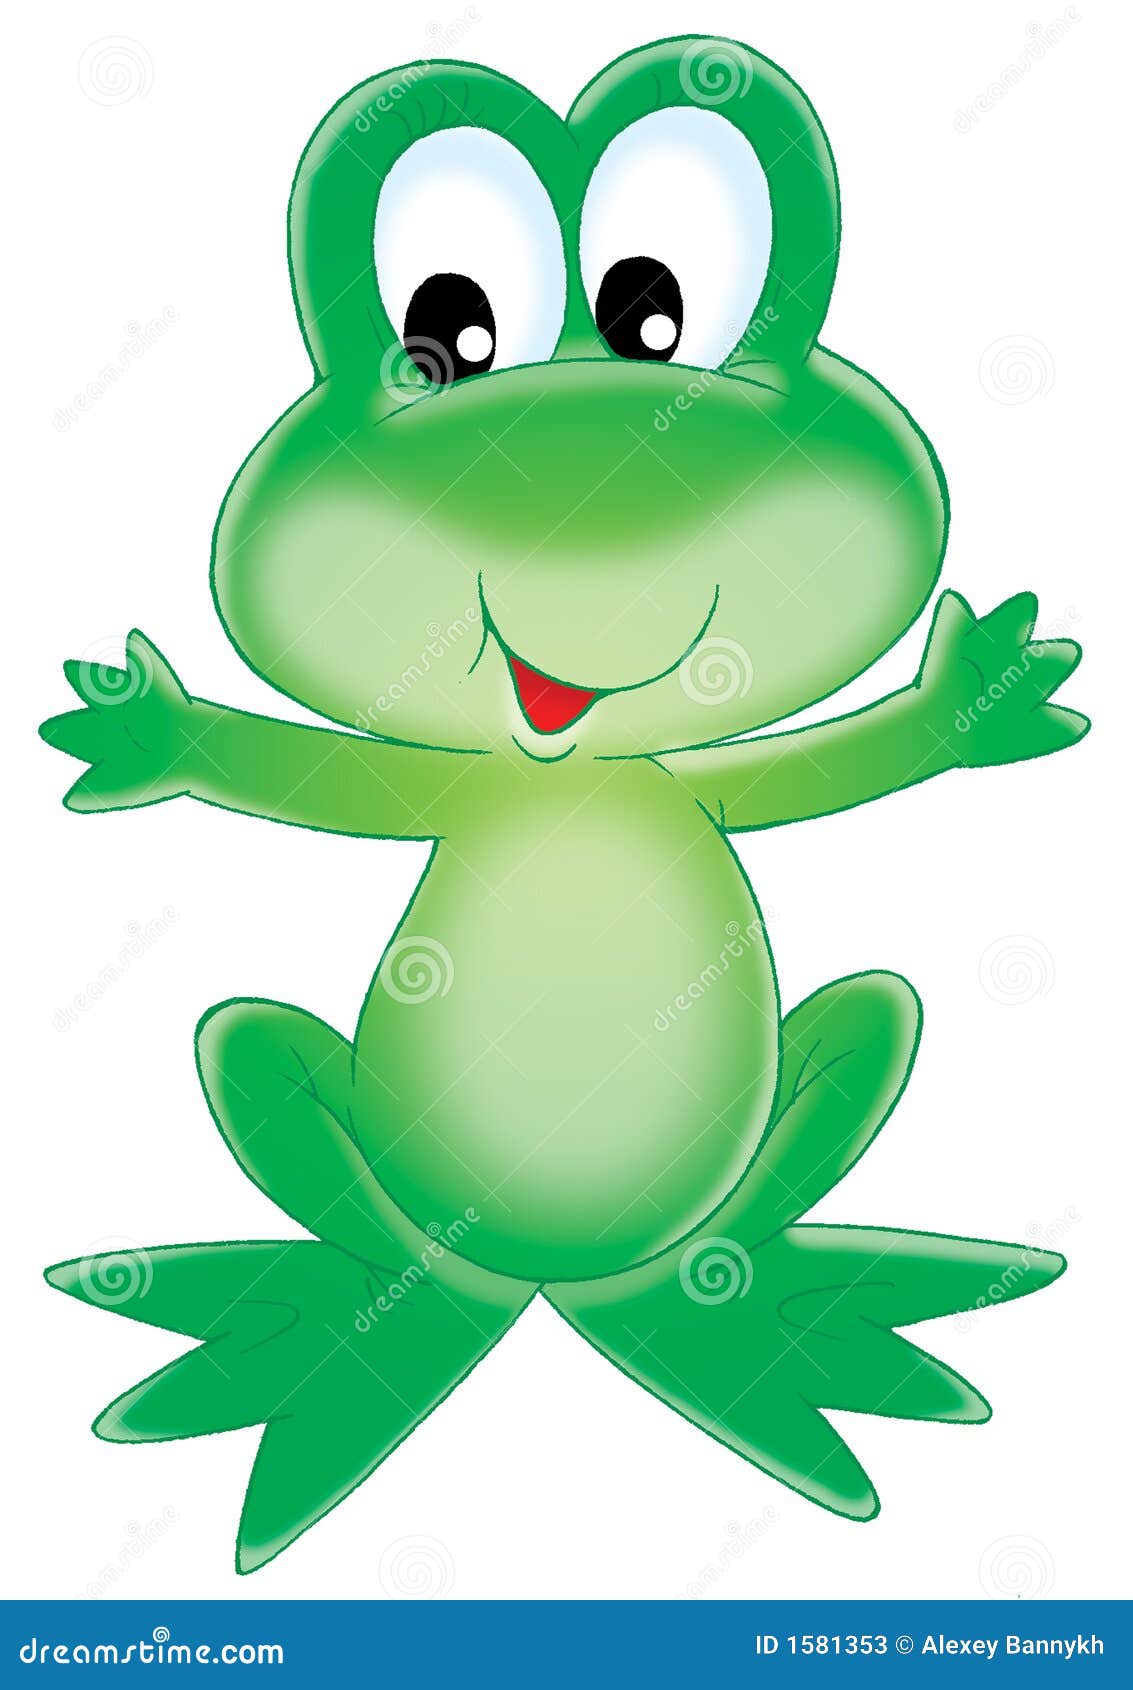 Green frog stock illustration. Illustration of frog, humorous ...